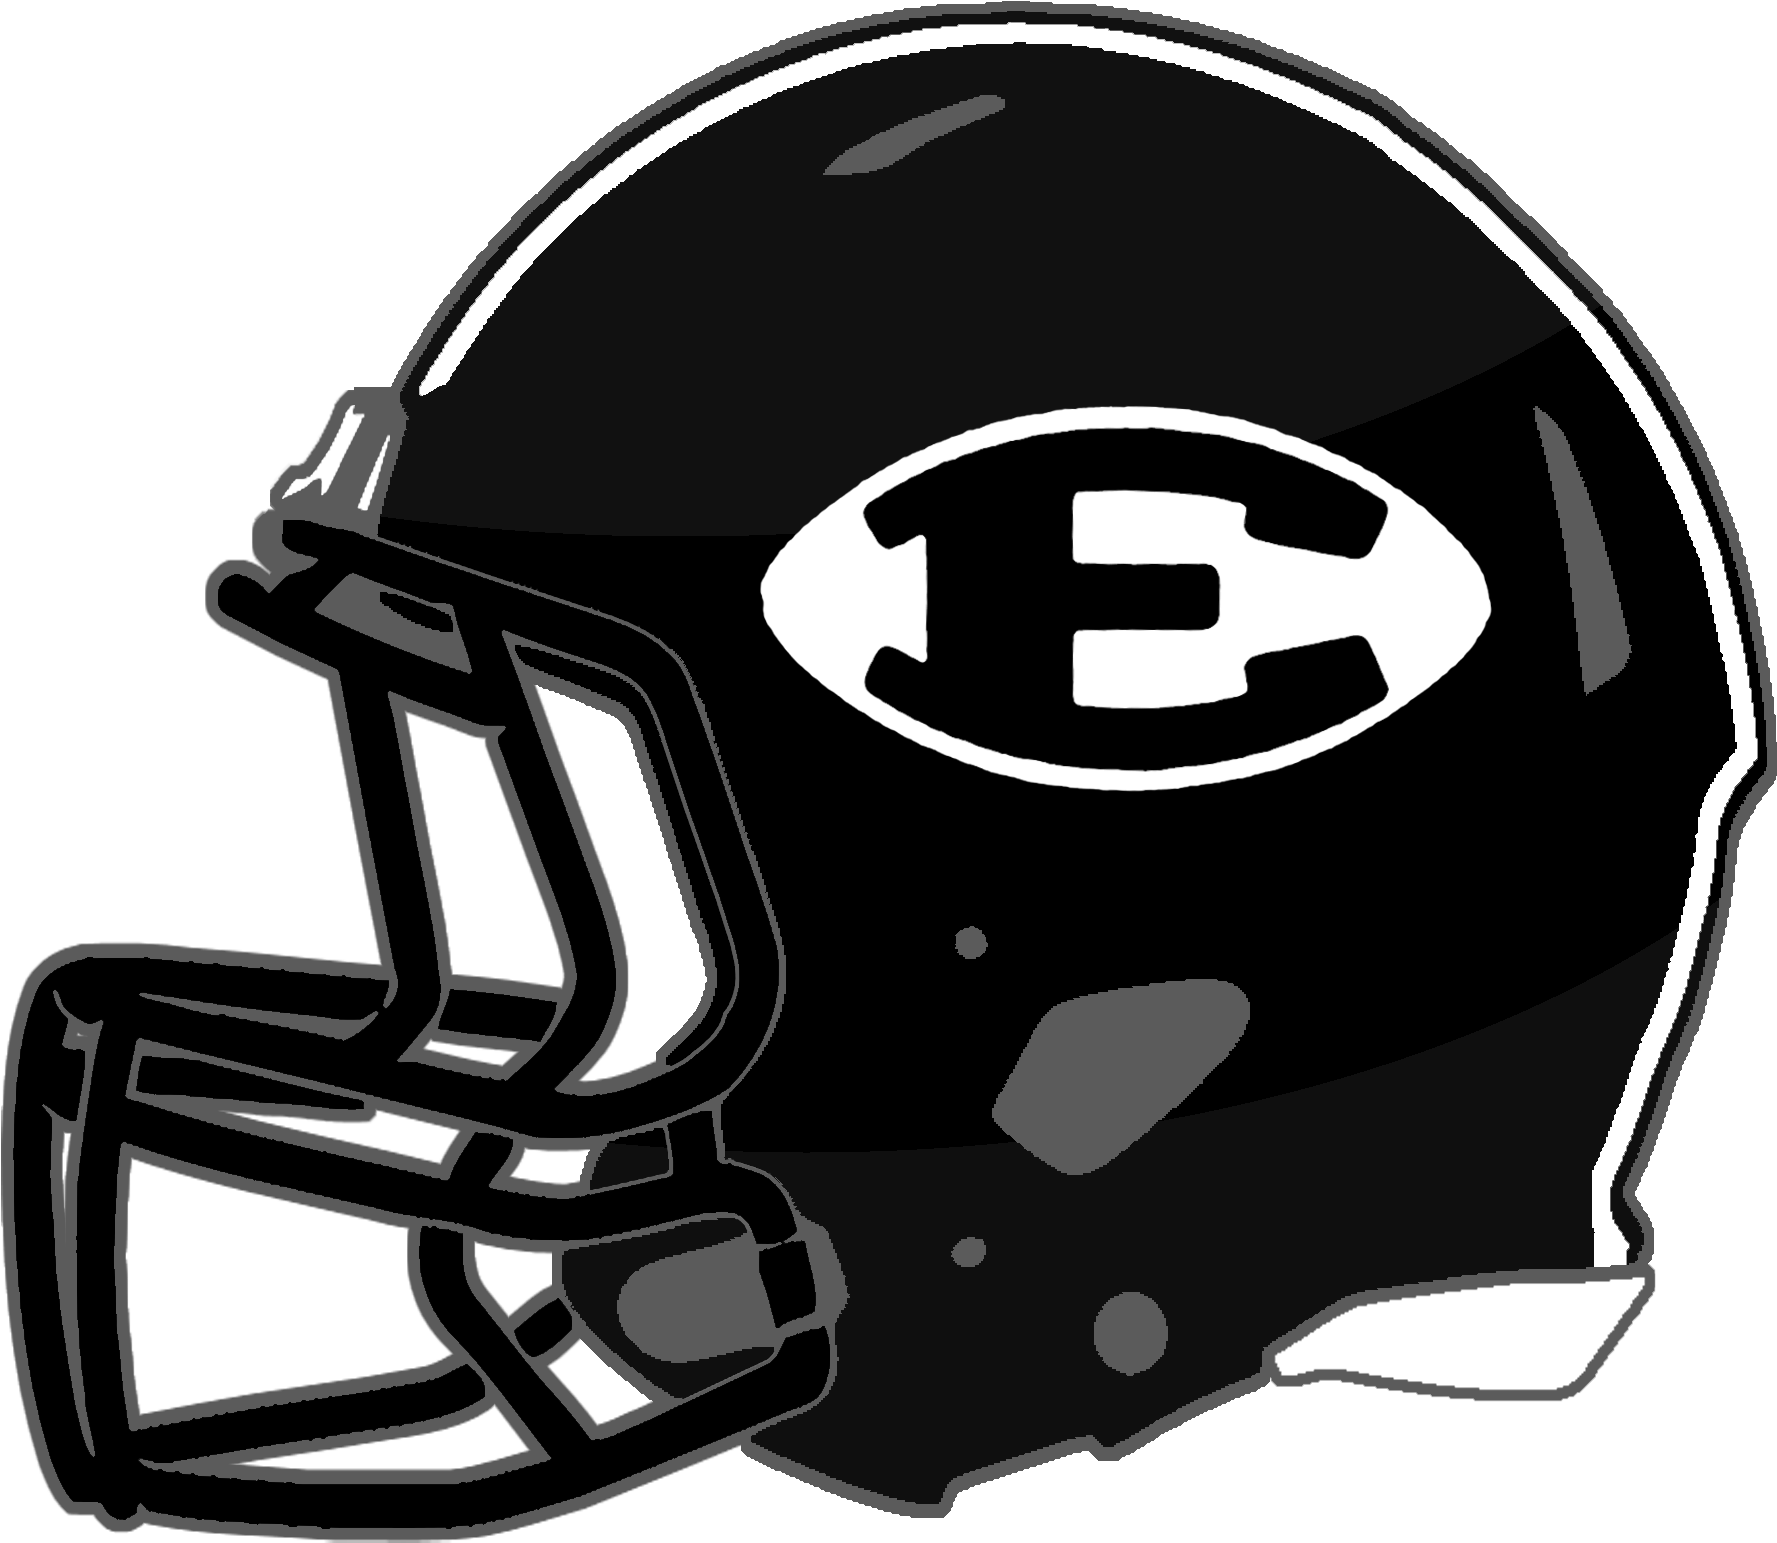 Enterprise Clarke Bulldogs - Football Helmet (1800x1565)